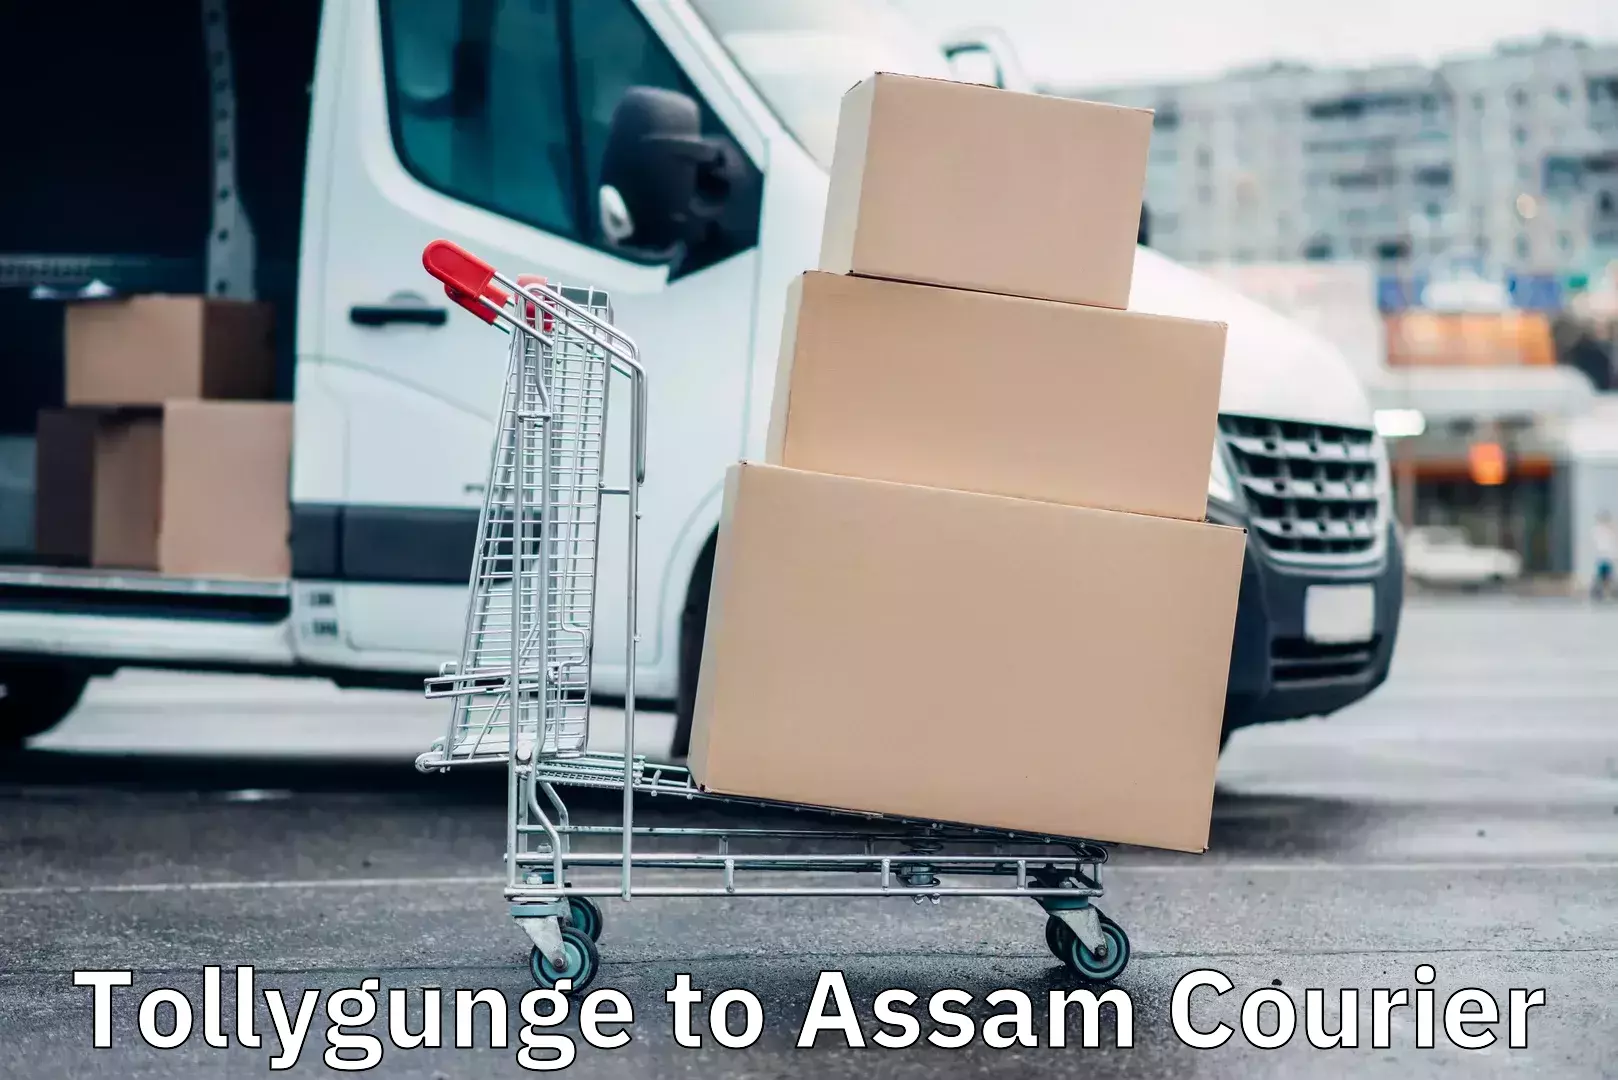 Doorstep delivery service Tollygunge to Assam